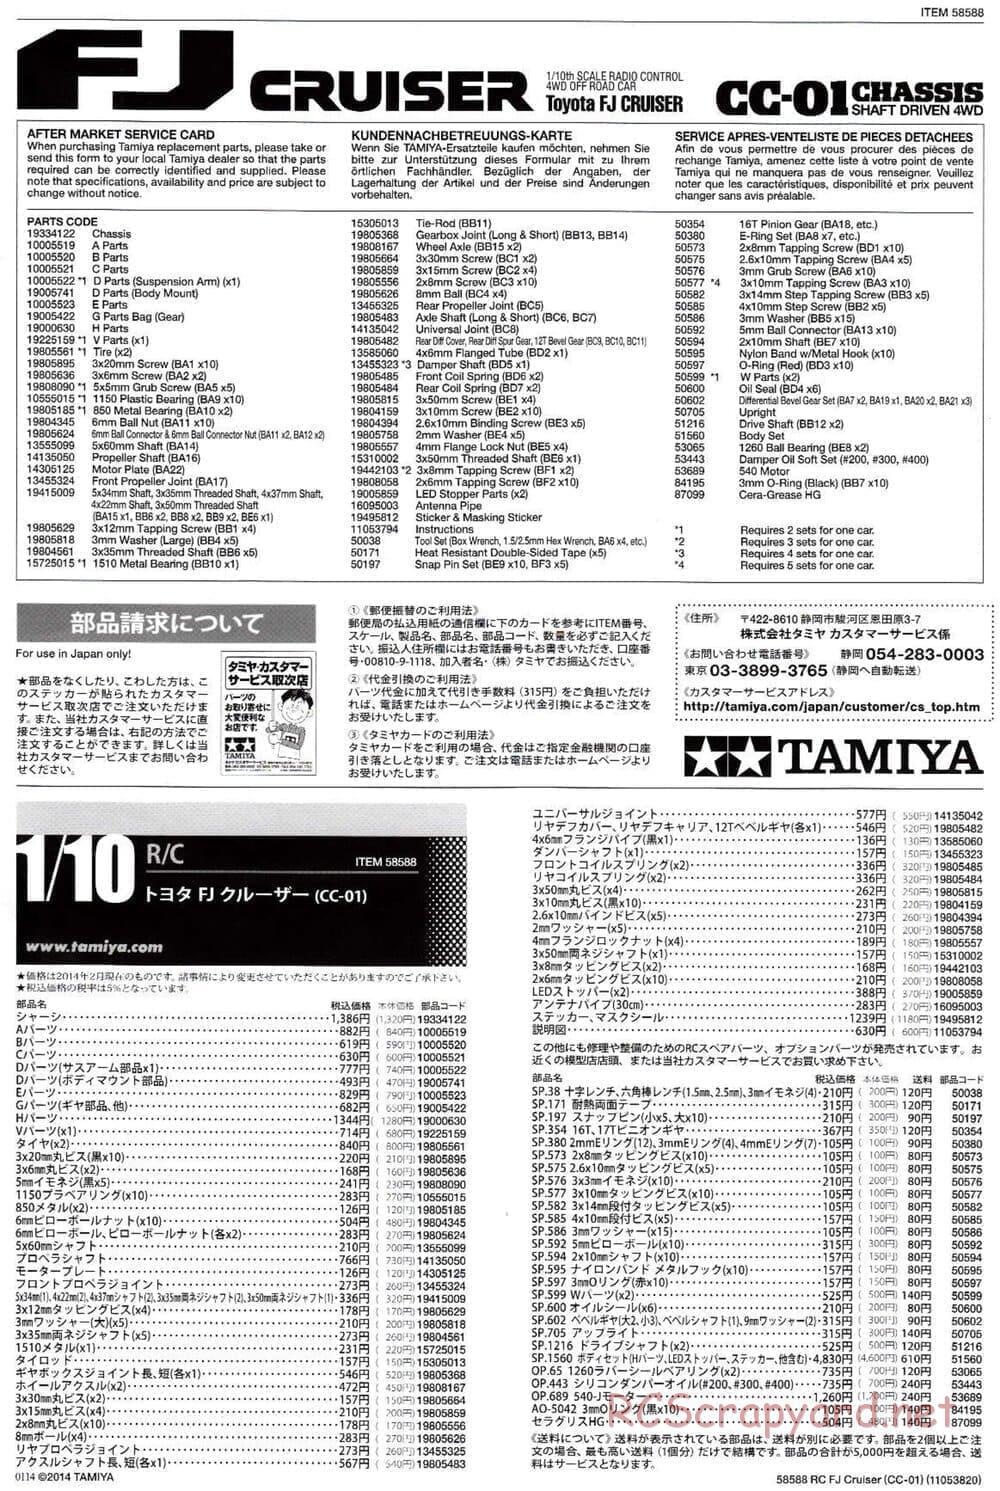 Tamiya - Toyota FJ Cruiser - CC-01 Chassis - Manual - Page 25